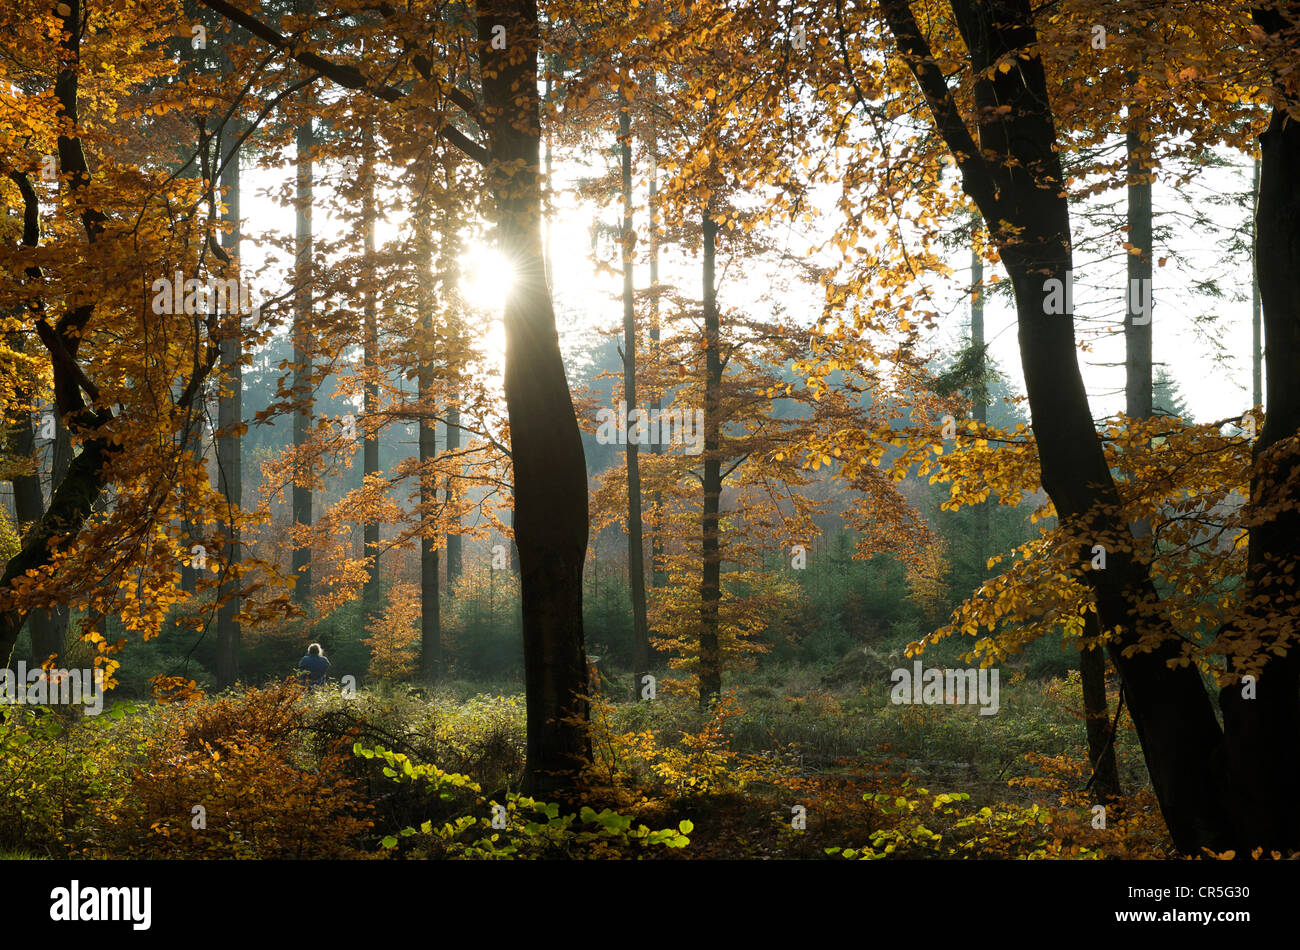 Germany, North Rhine-Westphalia, Monschau, forest in autumn Stock Photo